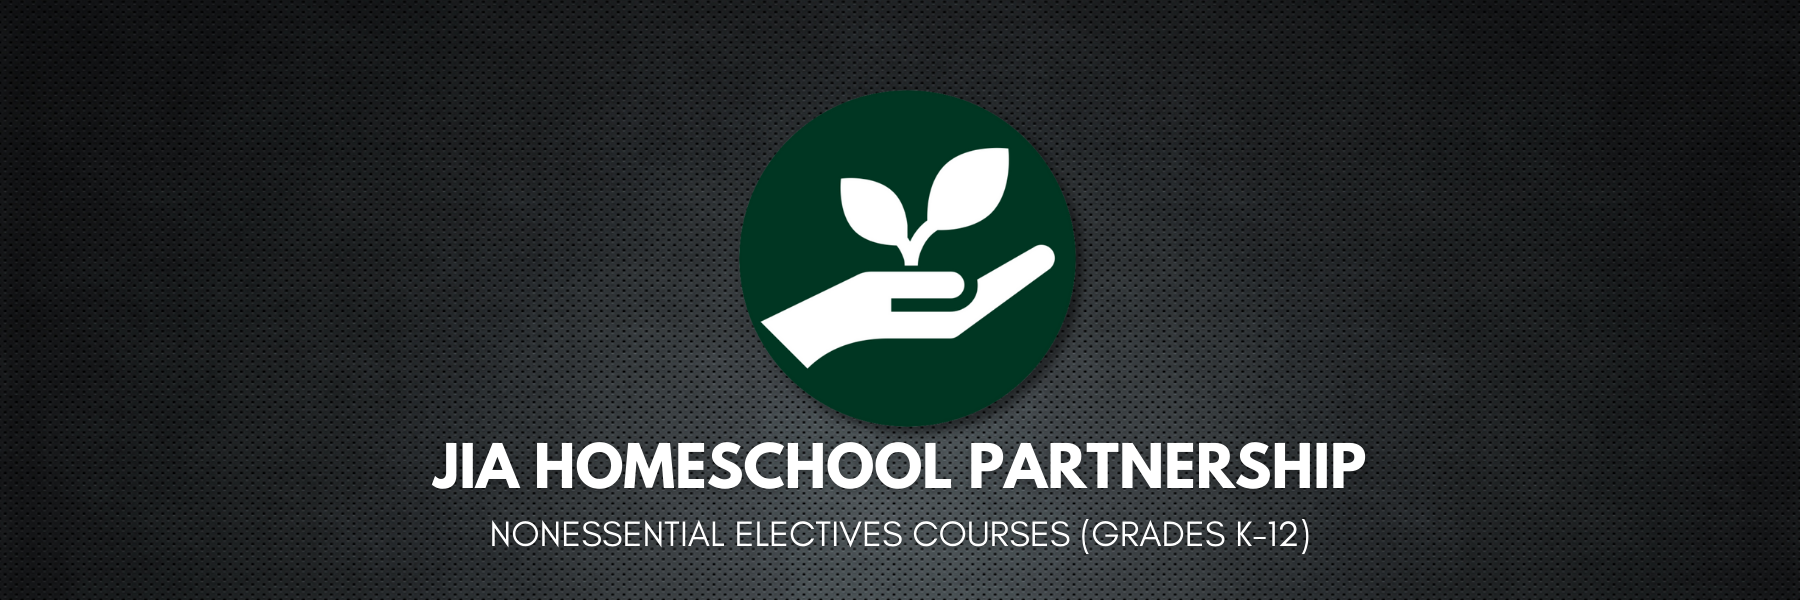 JIA Homeschool Partnership: Nonessential Elective Courses (Grades K-12)